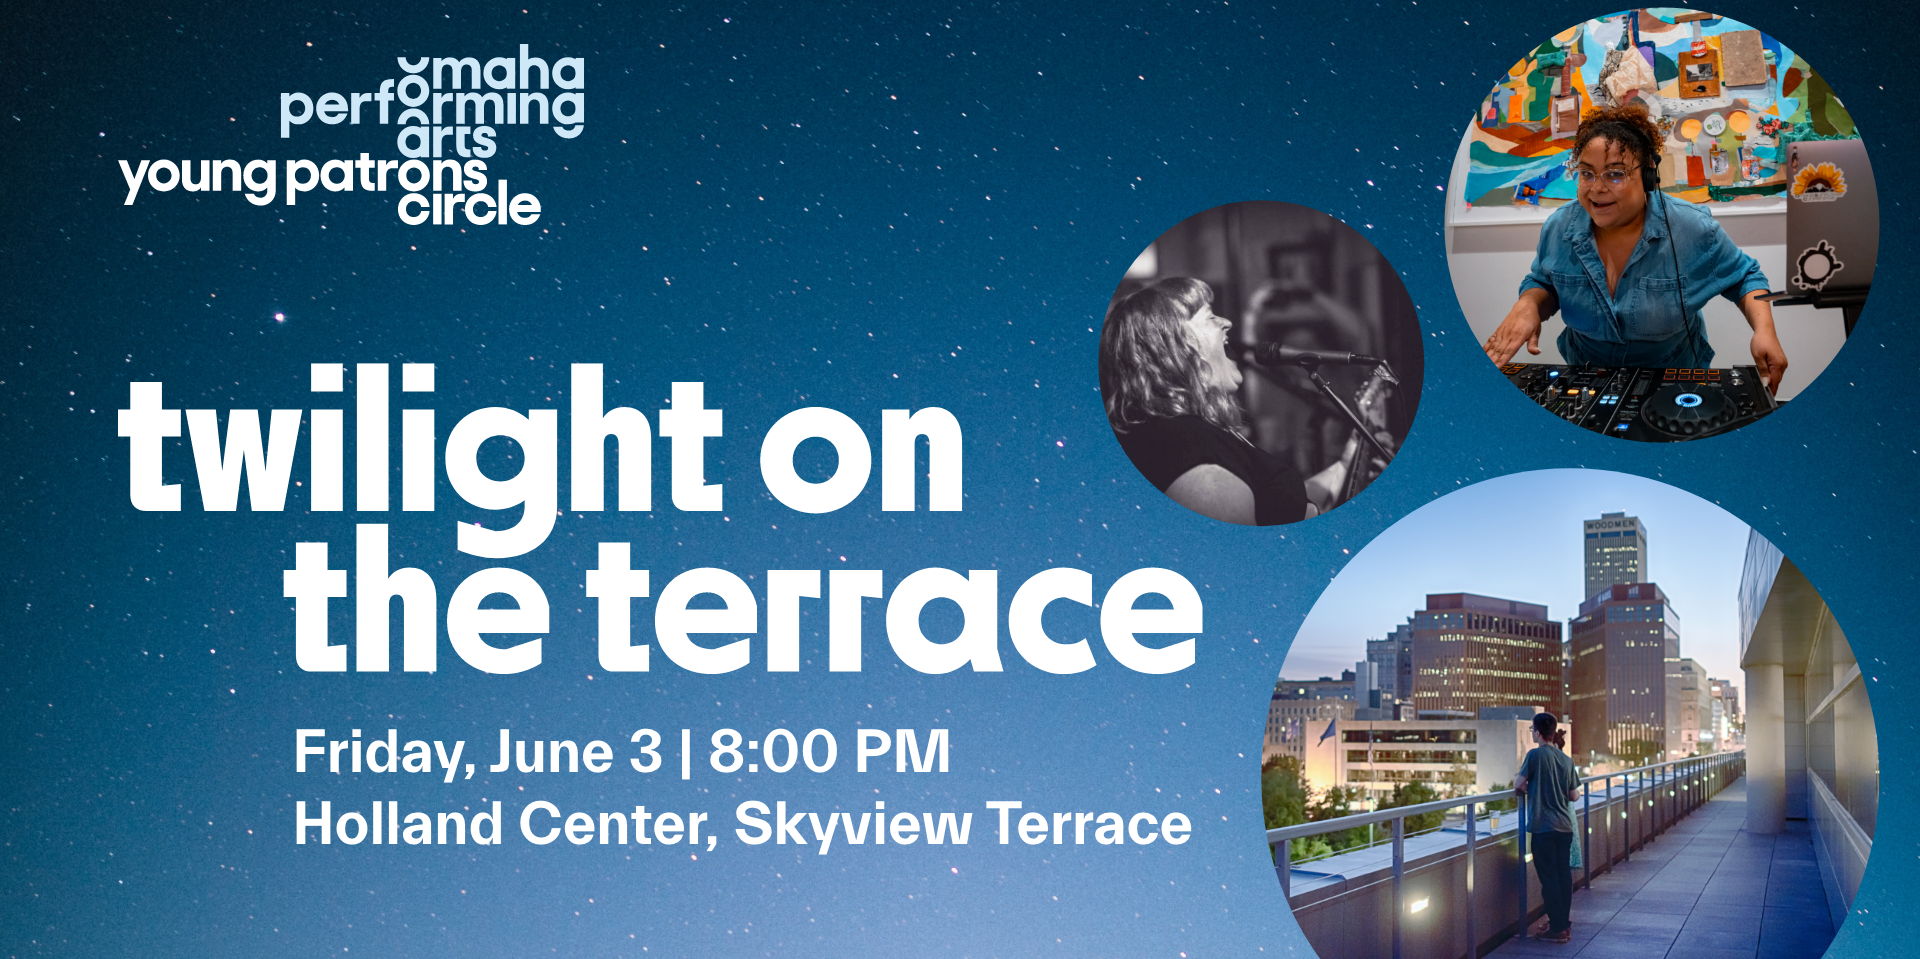 Twilight on the Terrace promotional image